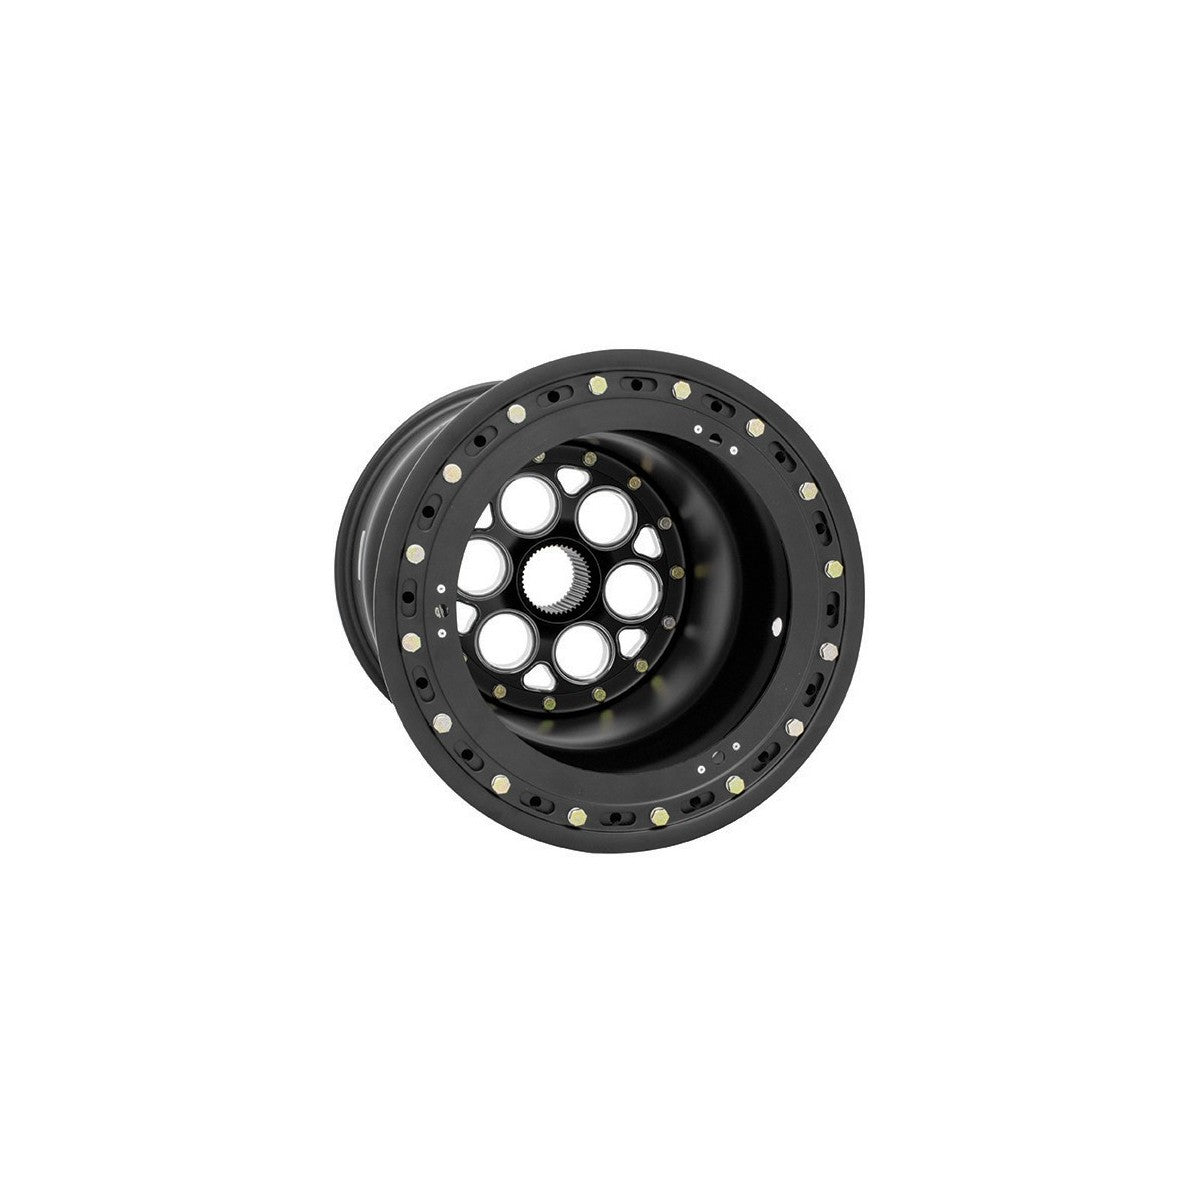 Weld 735B-51546K Magnum Sprint Wheel 15x15 42-Spline ET0 BS6 Black Center - Polished Shell